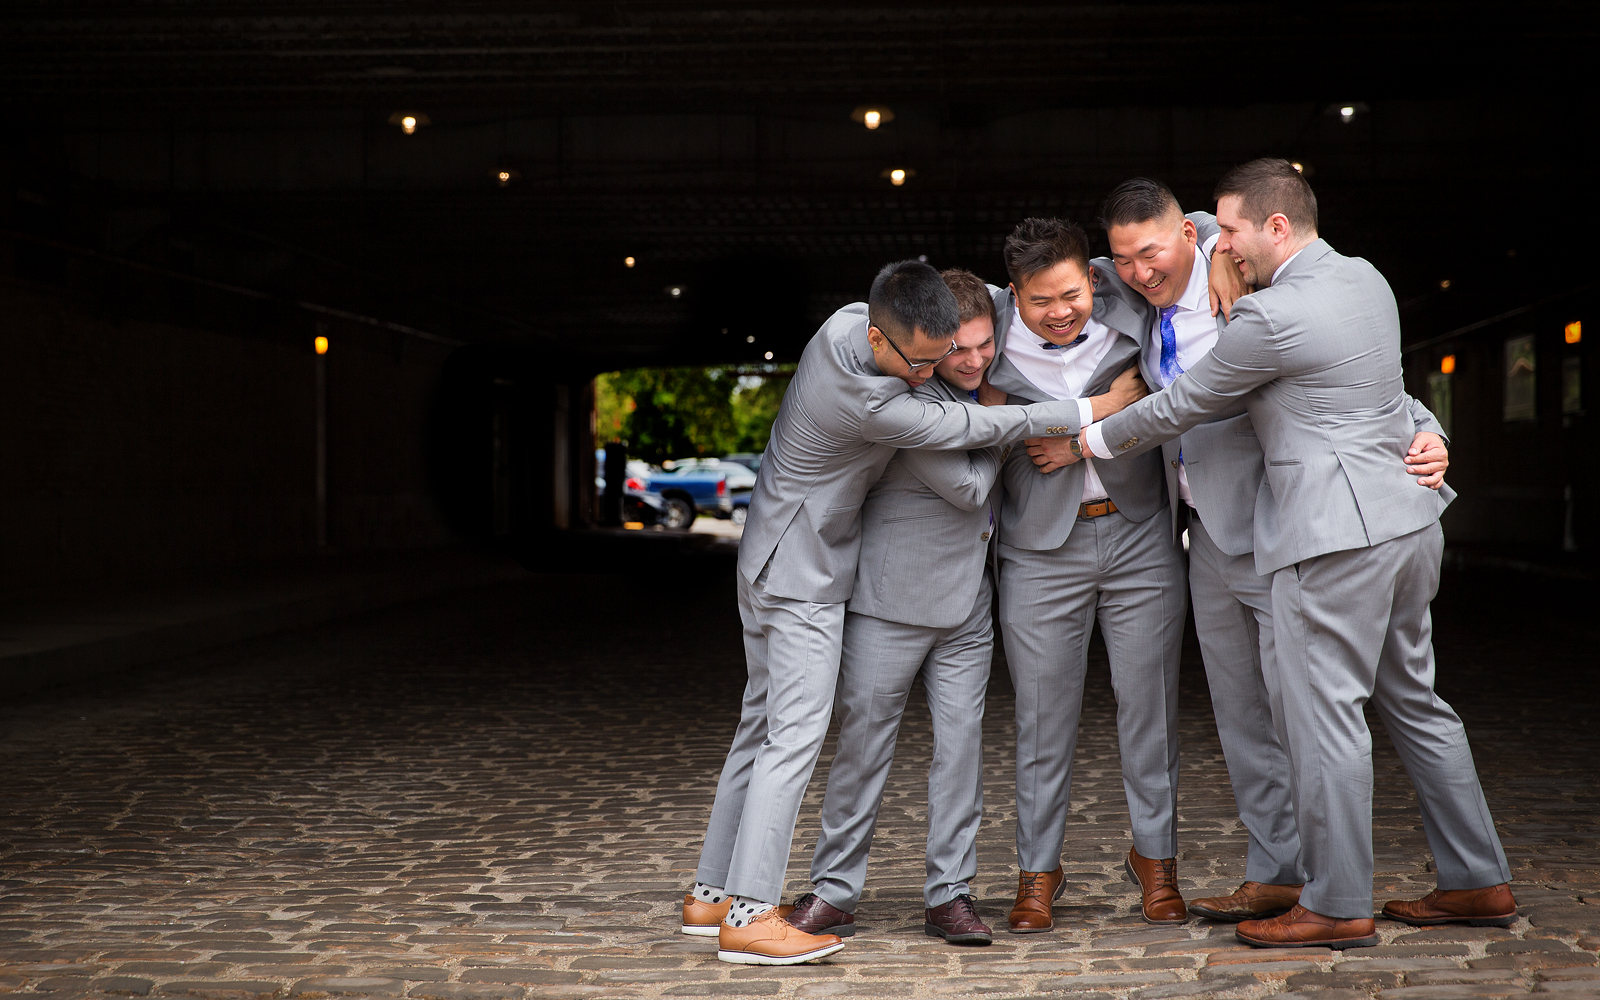 Chris hugging his groomsmen